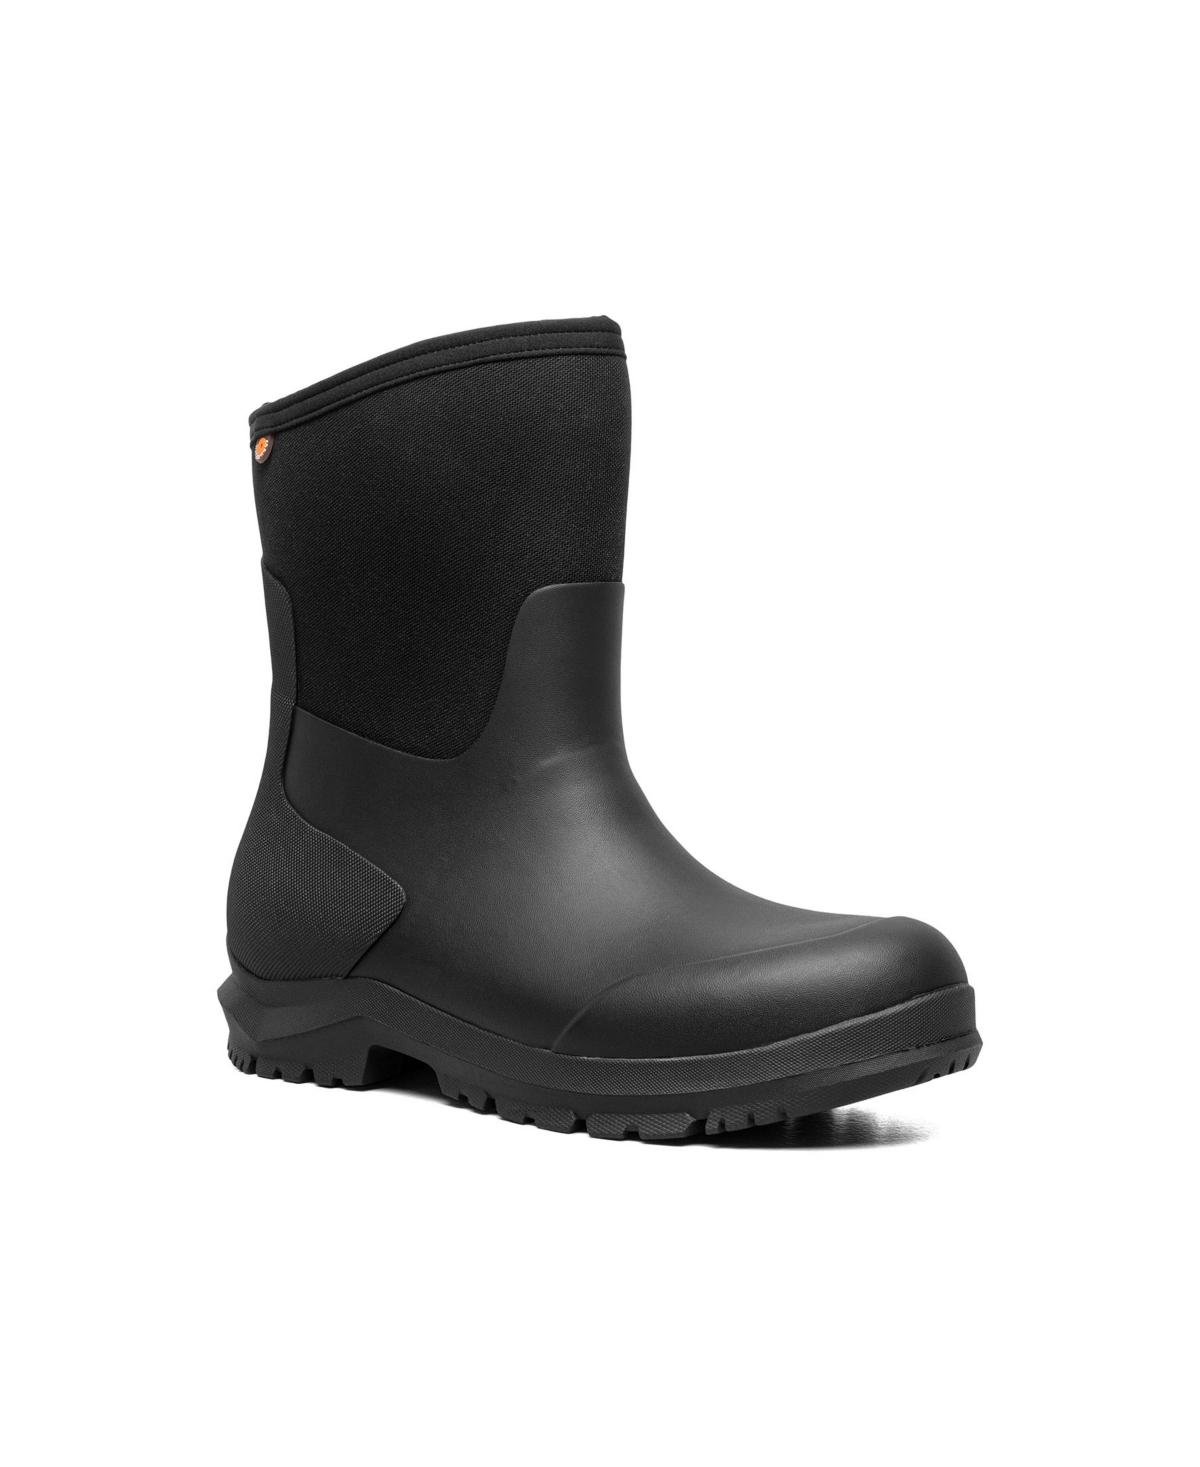 Men's Sauvie Basin Ii Slip-Resistant Boot - Black